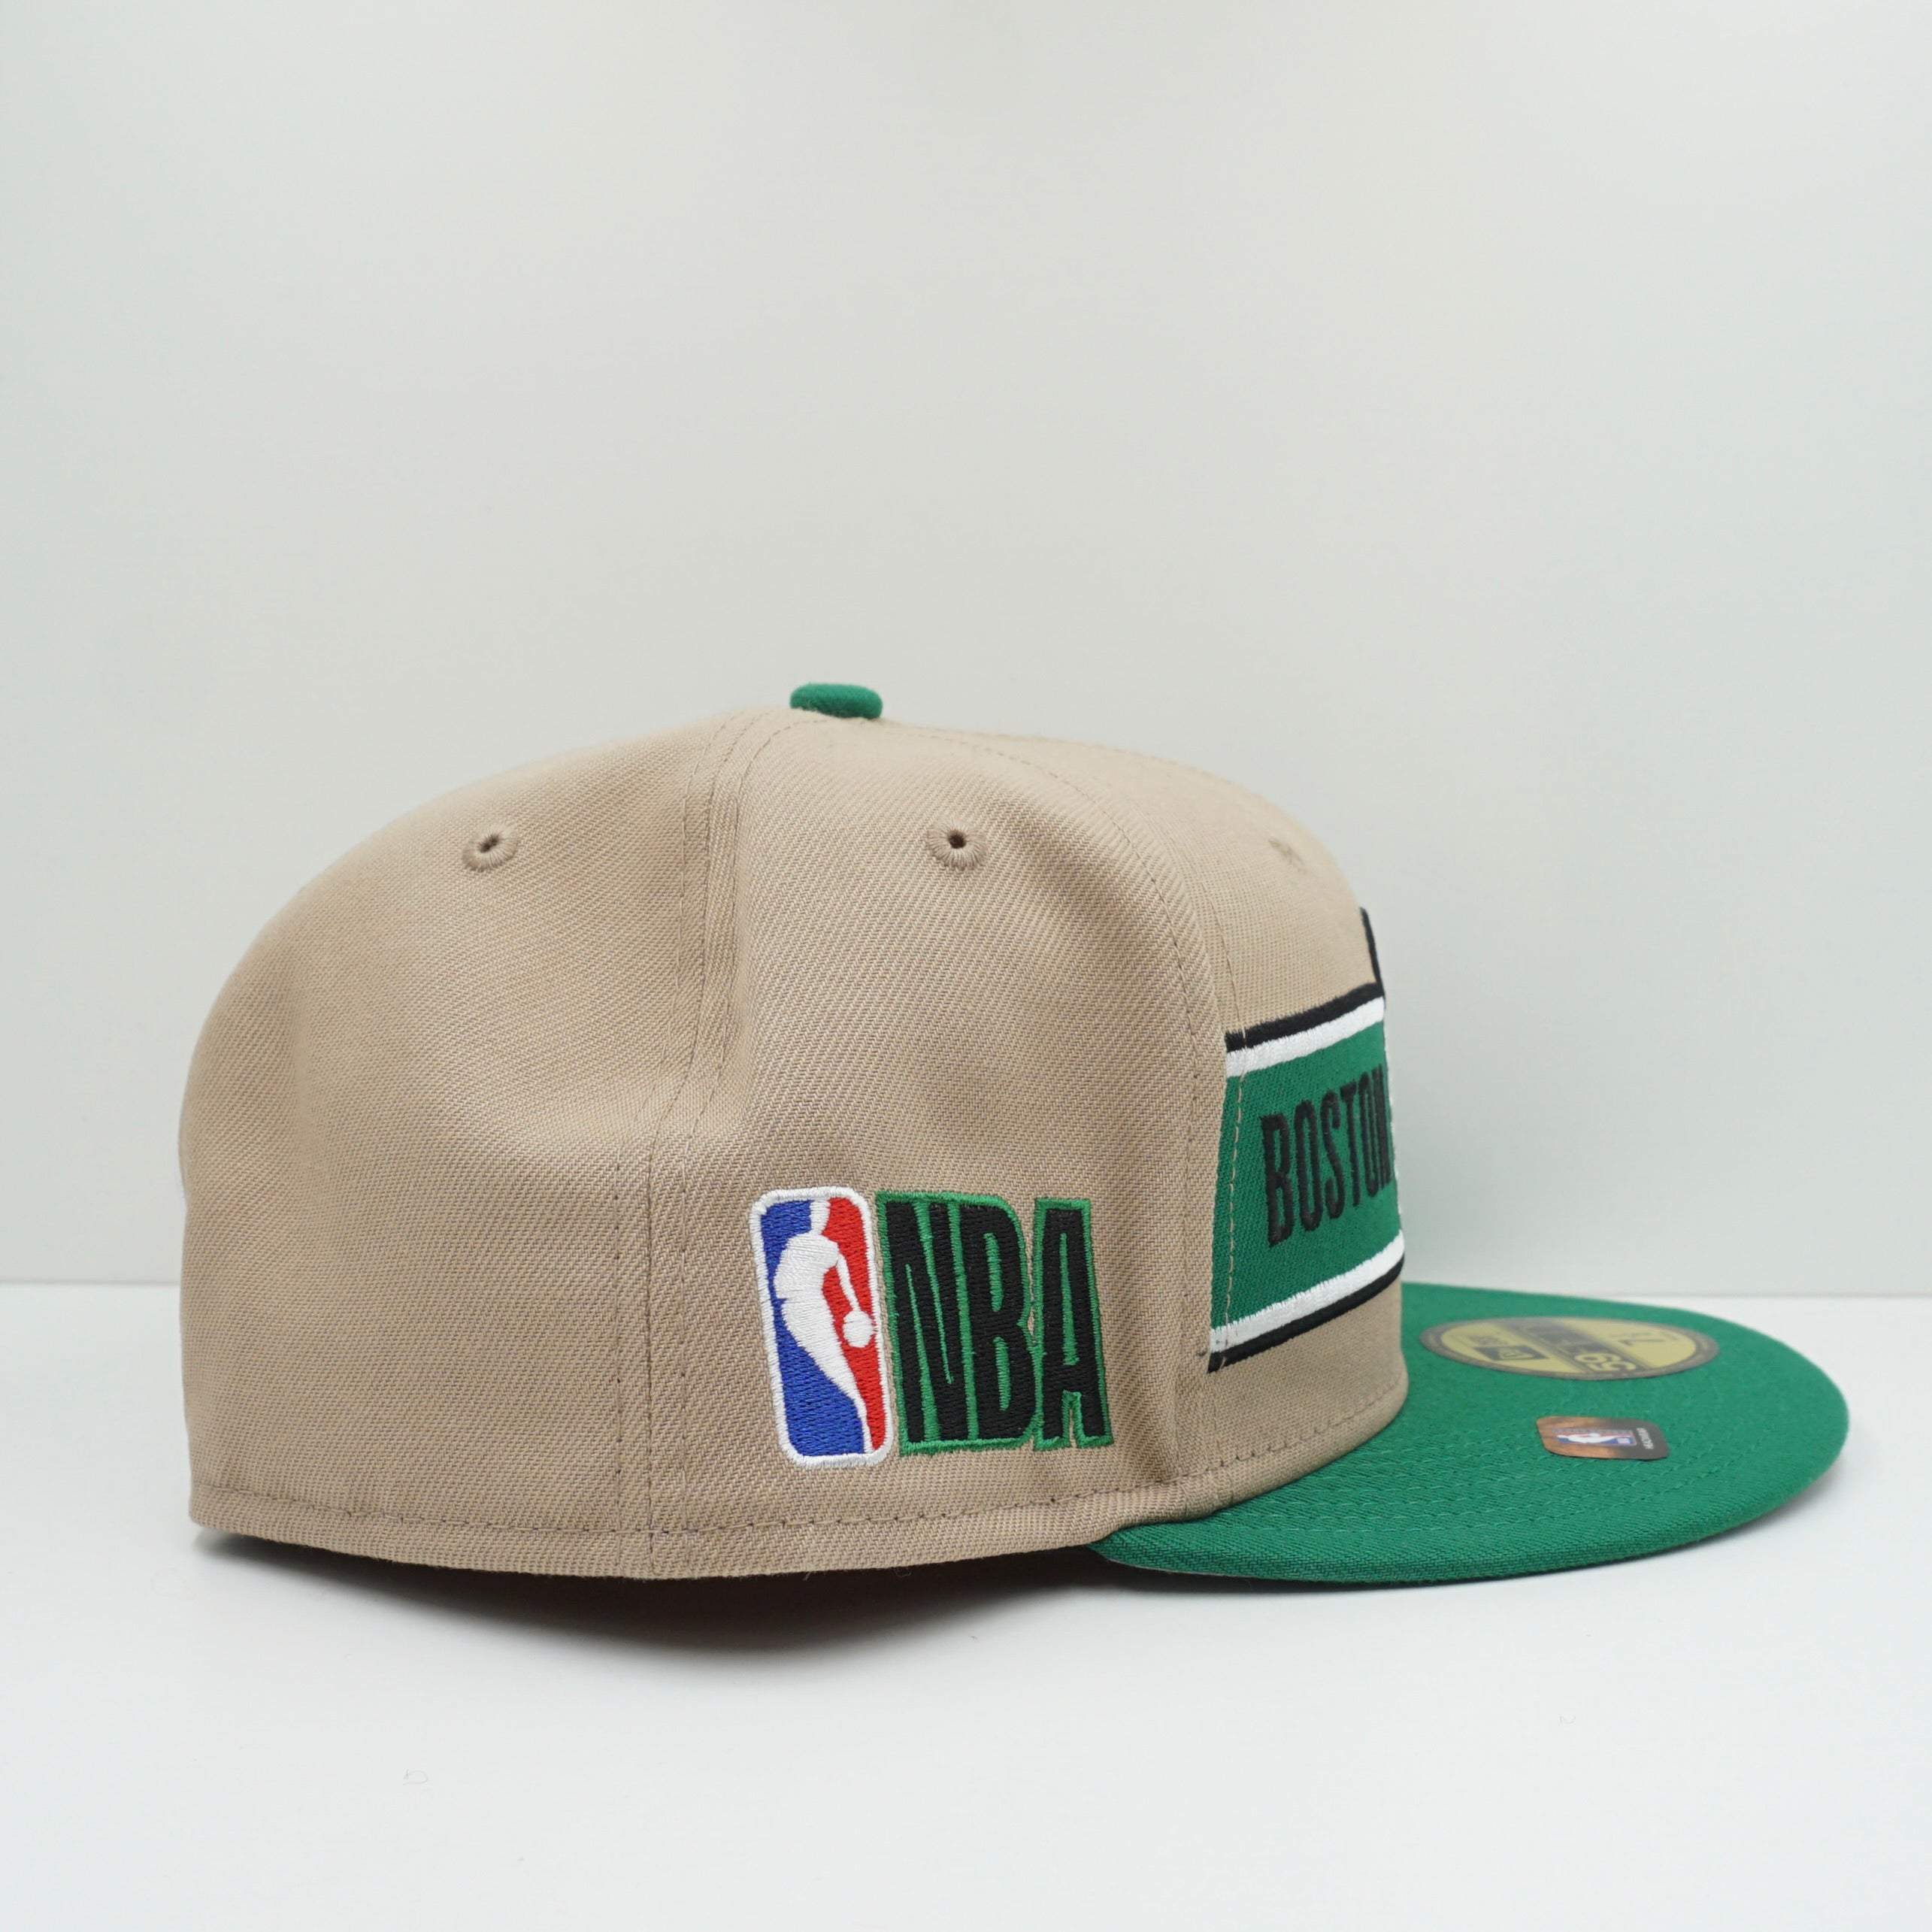 New Era Boston Celtics Beige Green Fitted Cap